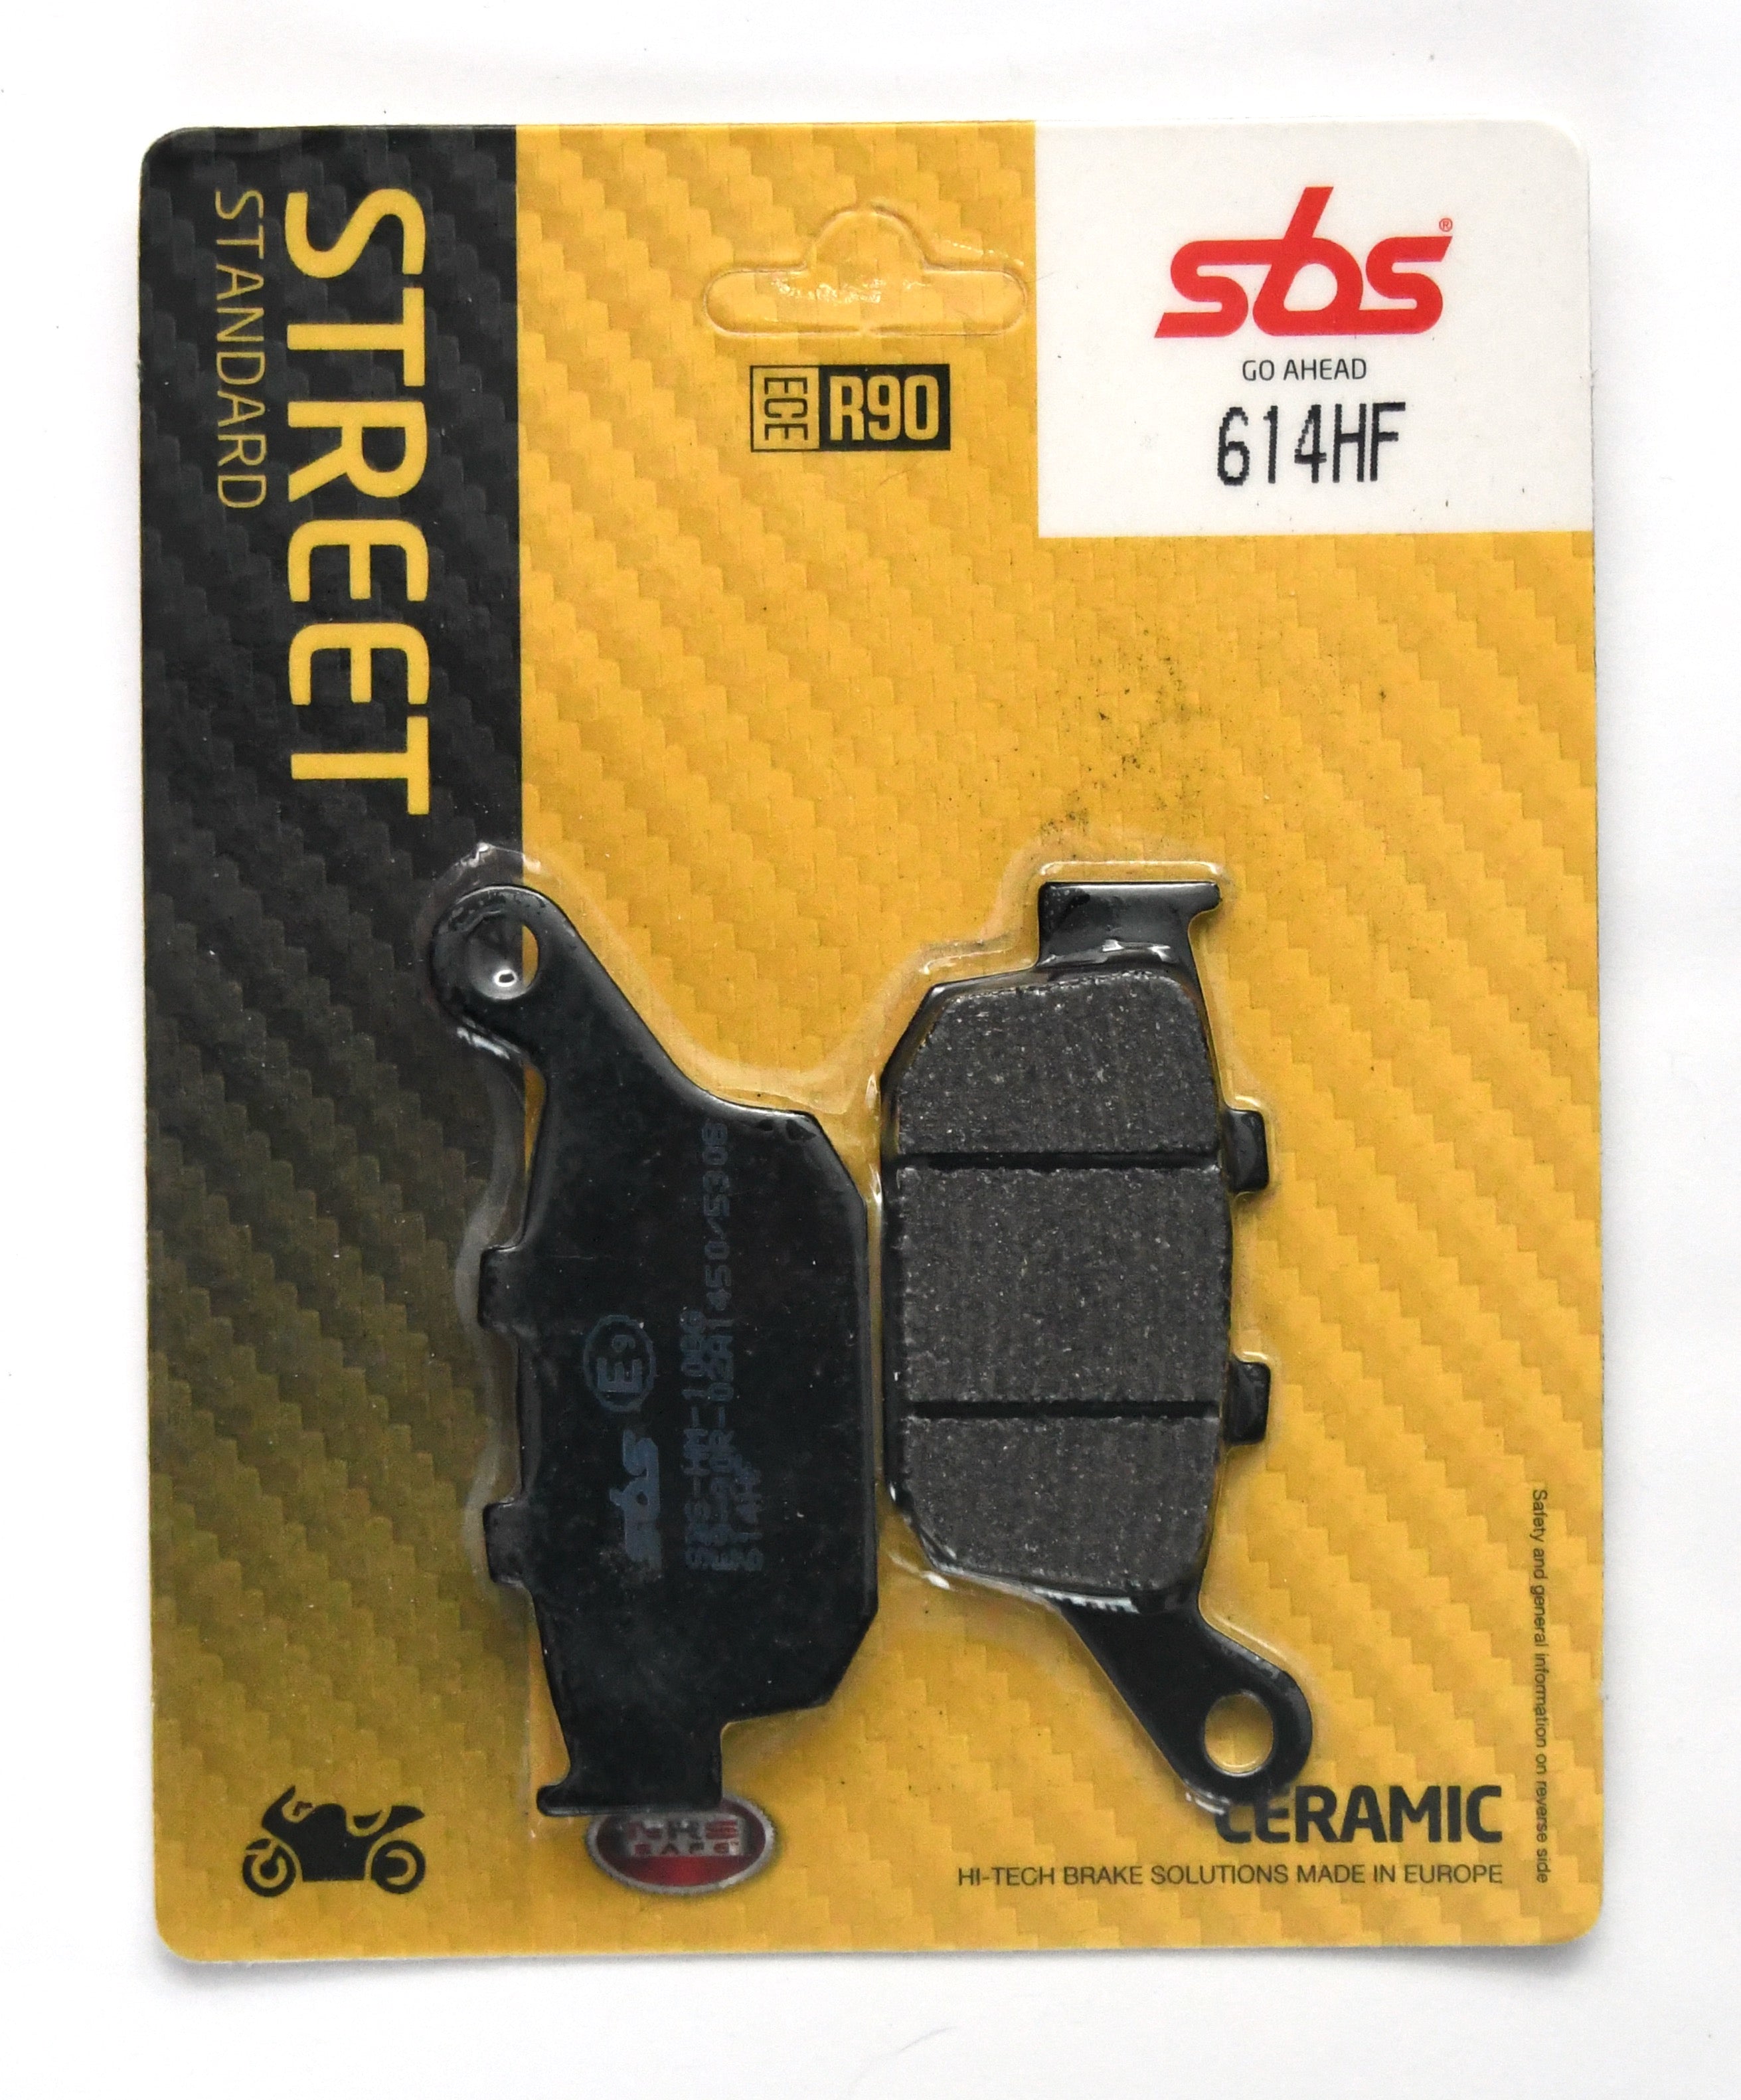 SBS Ceramic Brake Pads 614HF - Rear